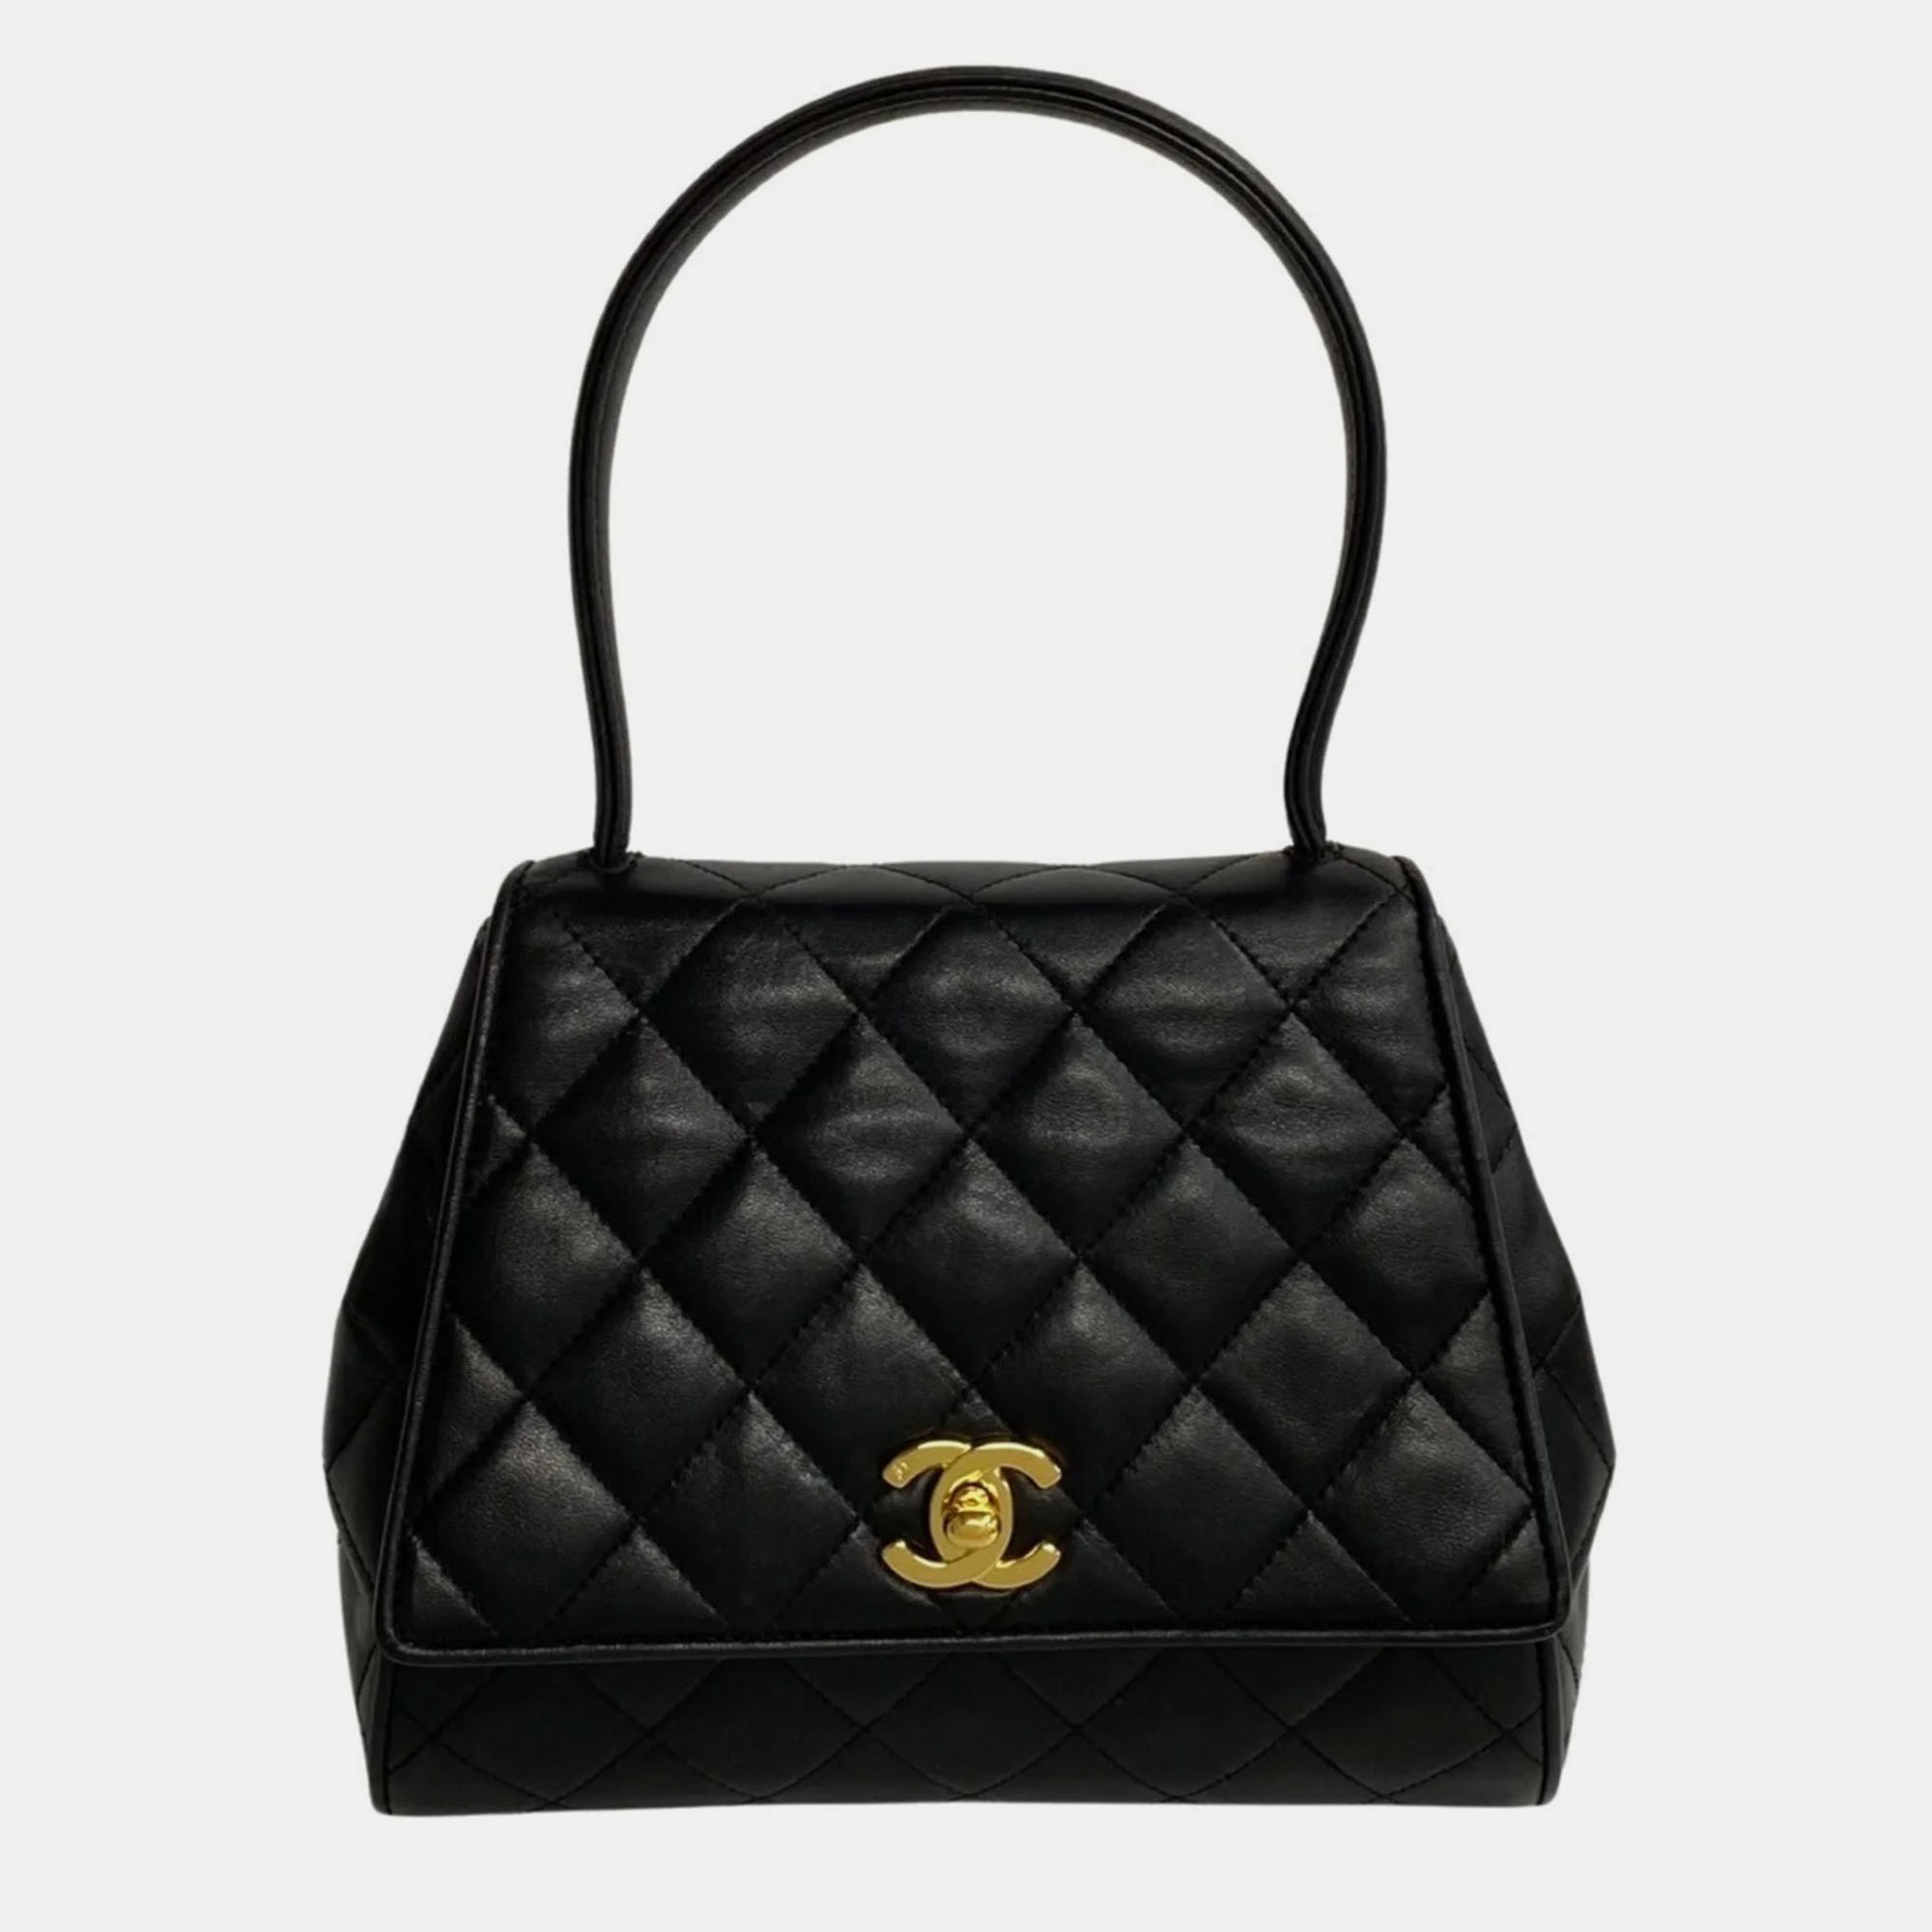 Chanel black leather cc turn-lock flap handbag